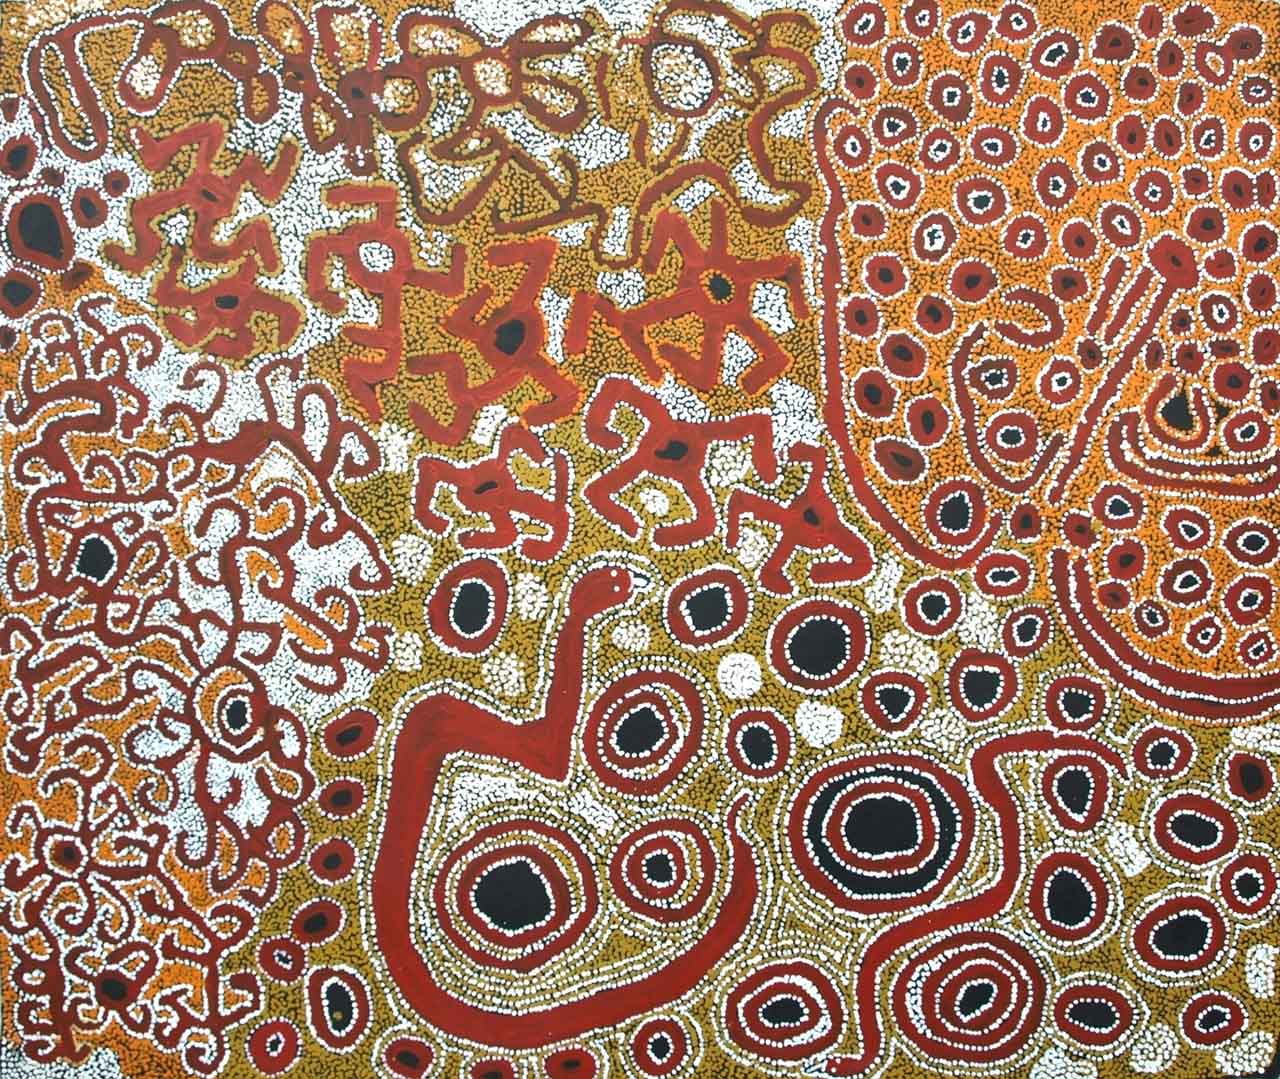 Spinifex artists - Buy Aboriginal Art Online at Japingka ...